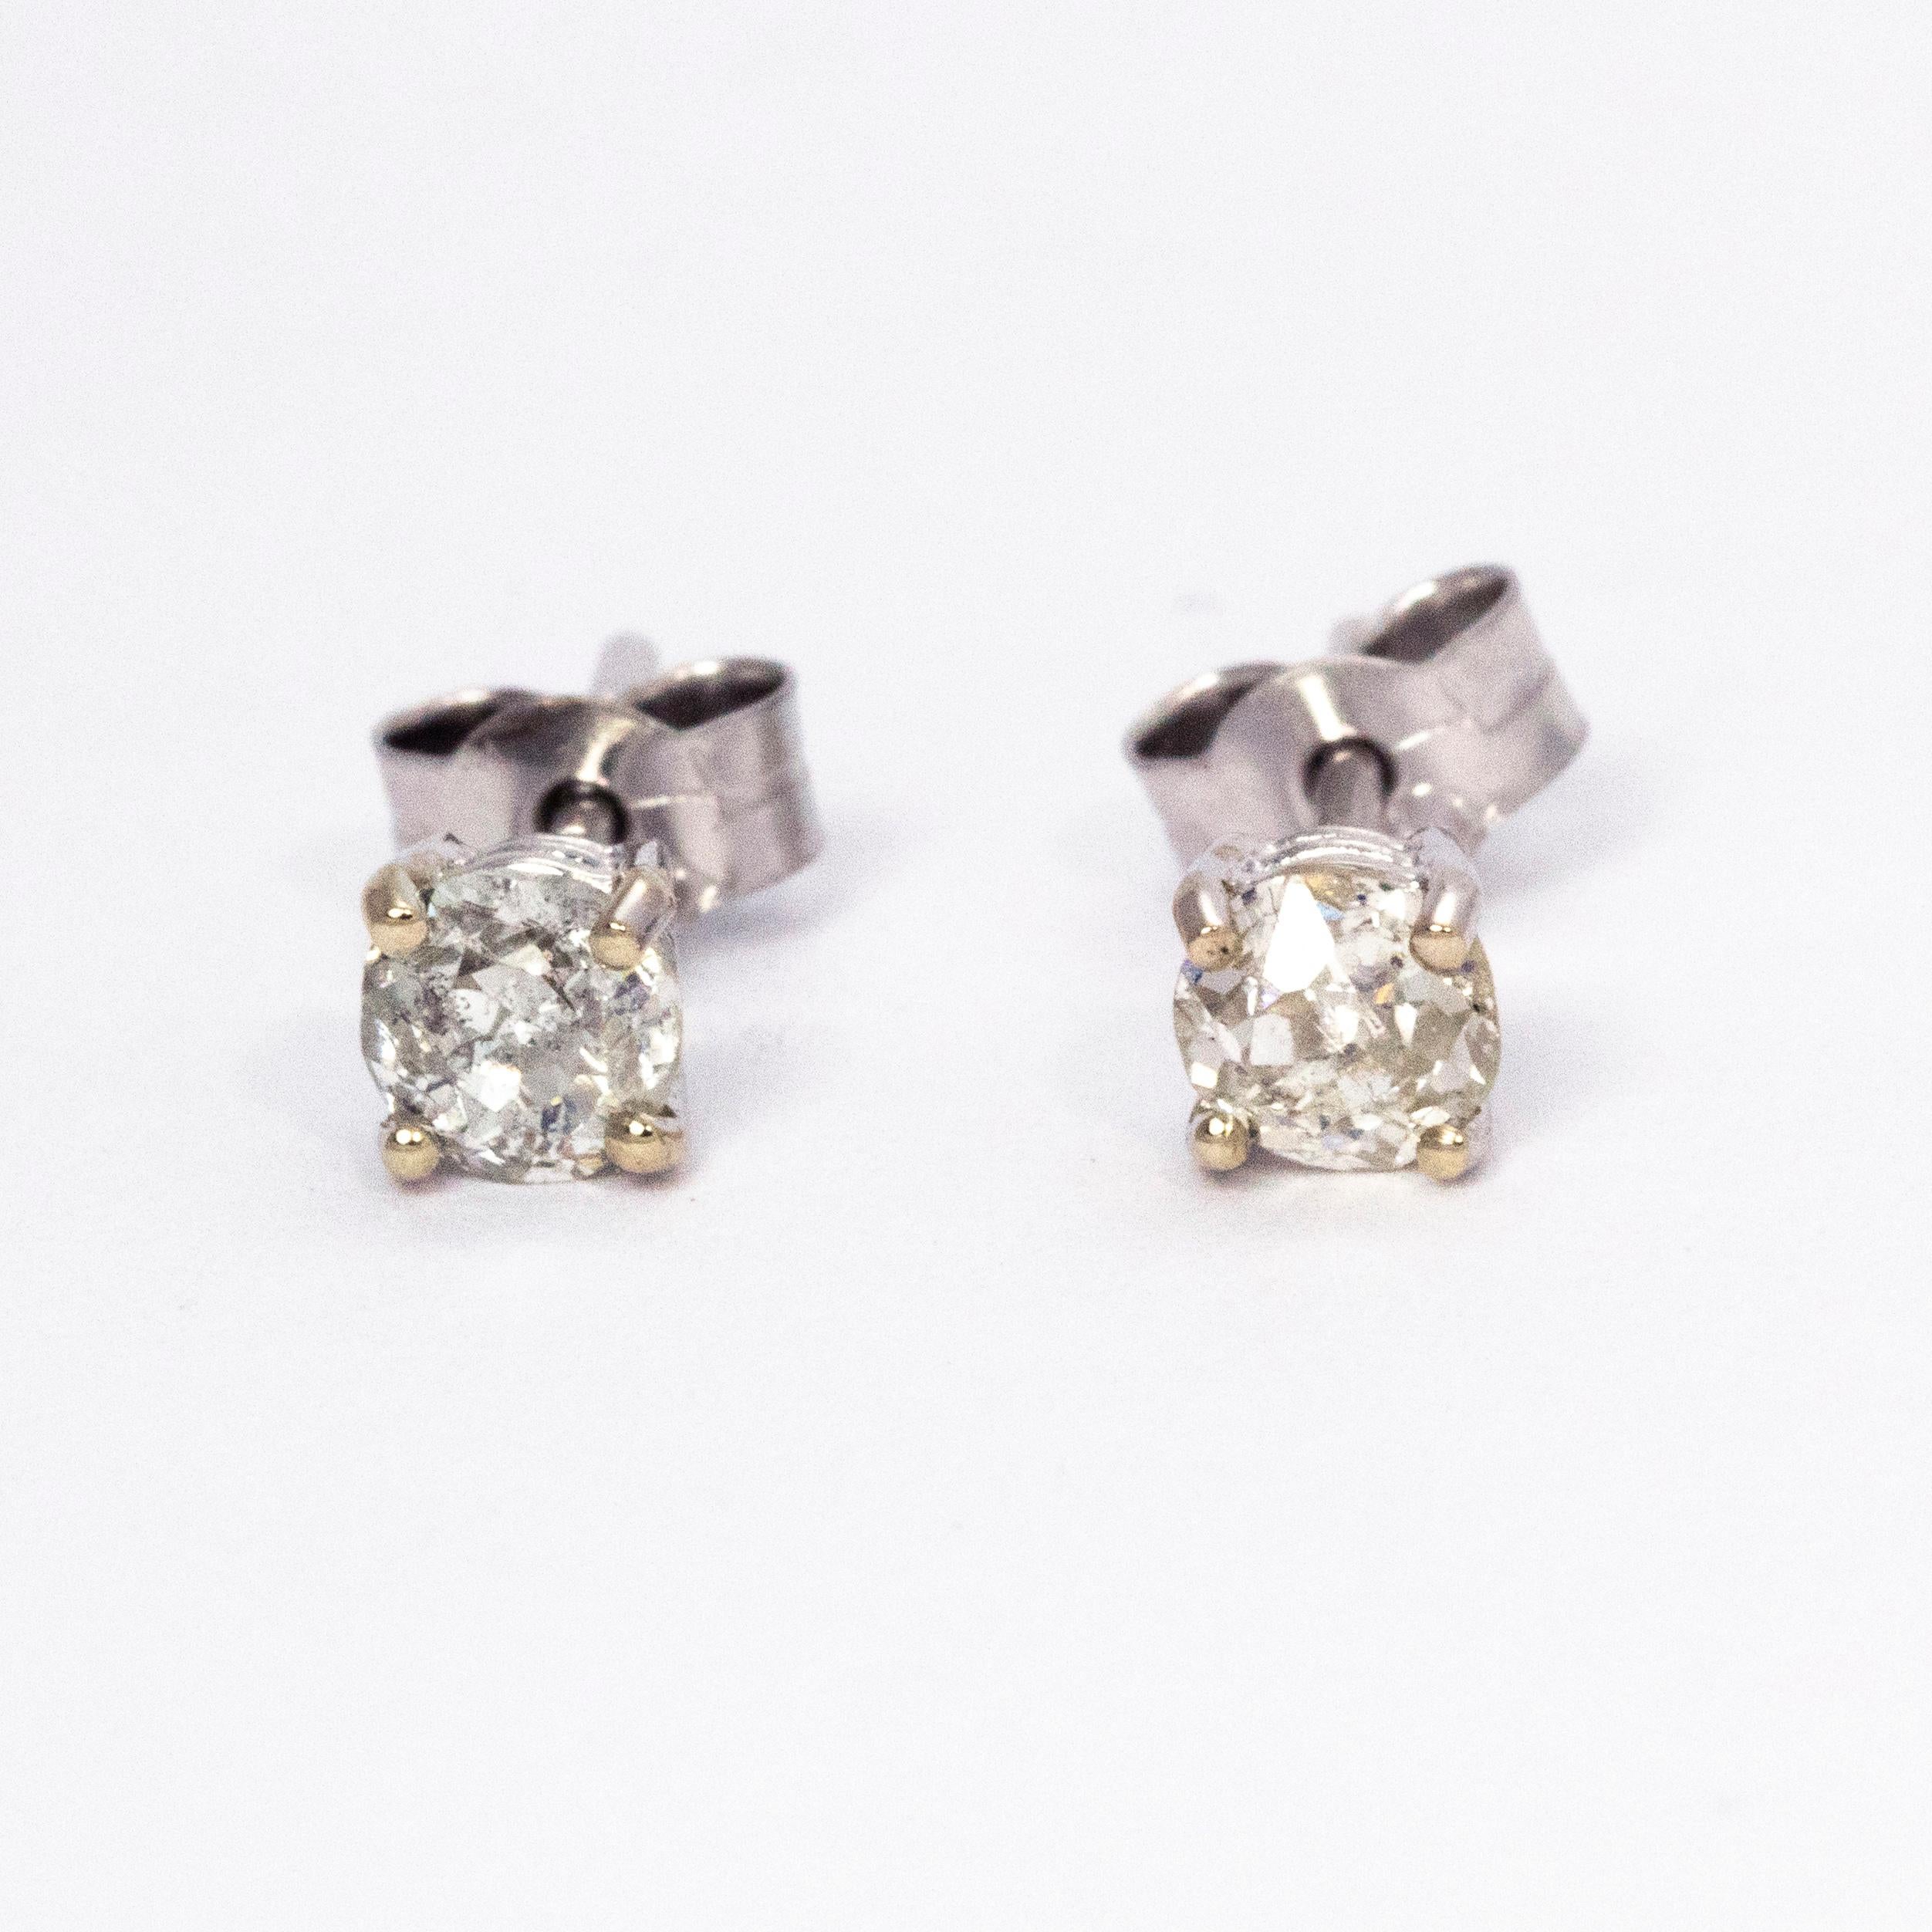 Beautifully simple diamond stud earrings holding 0.35 carat diamonds each set in 18ct white gold. 